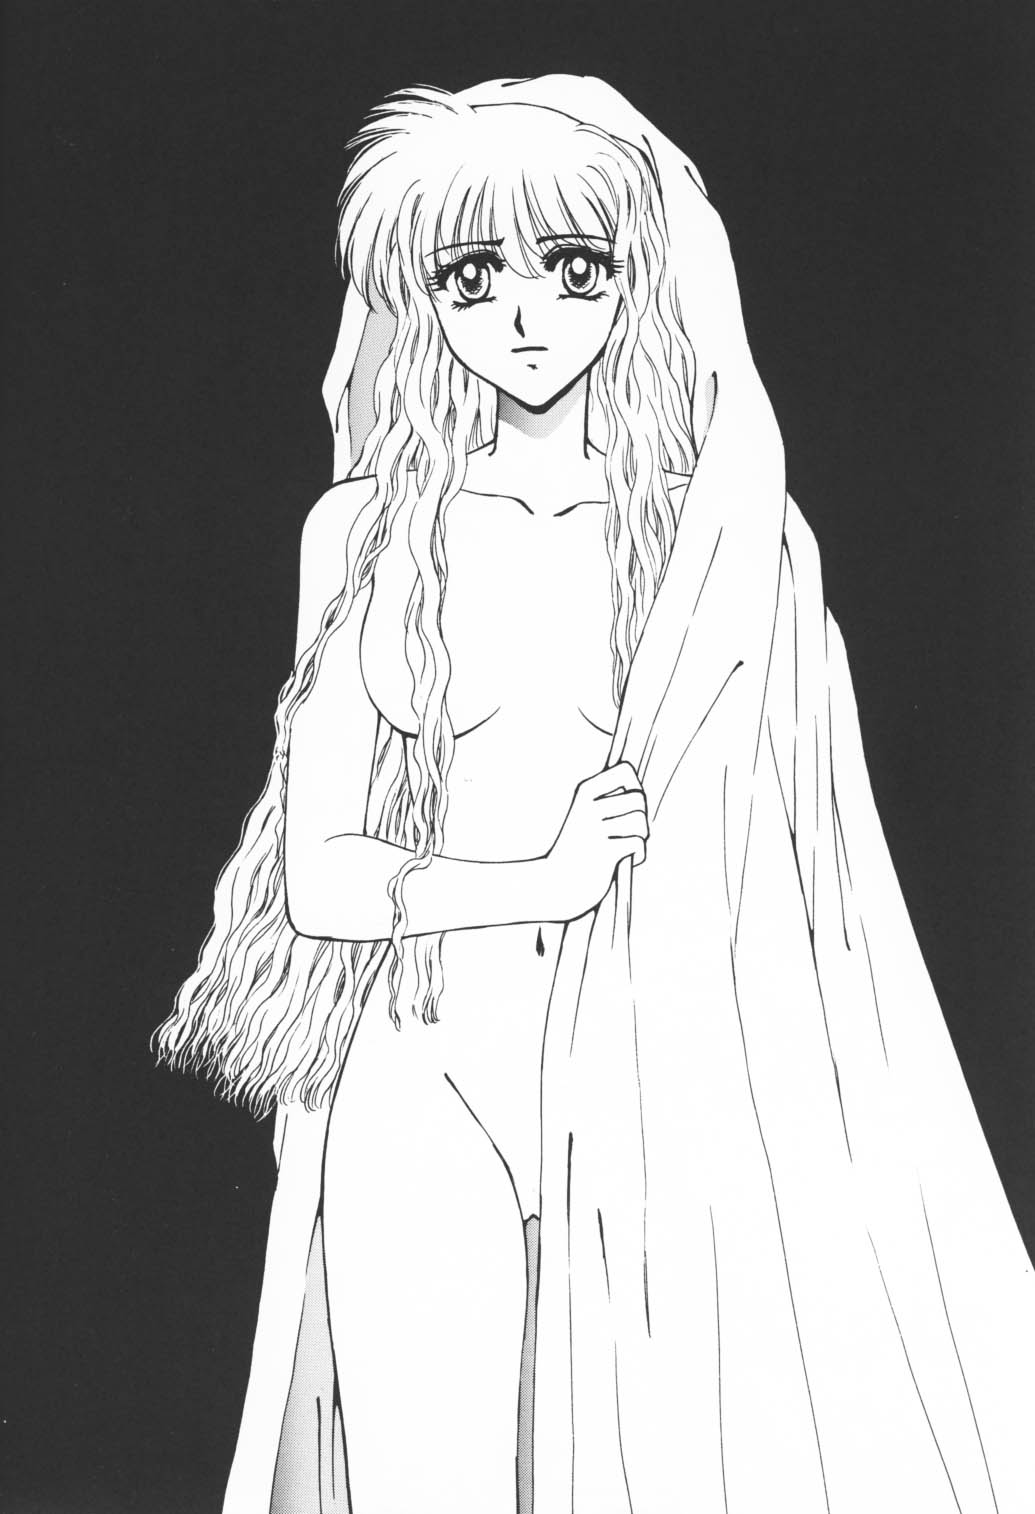 Cute De Ikou (Sailor Moon) 